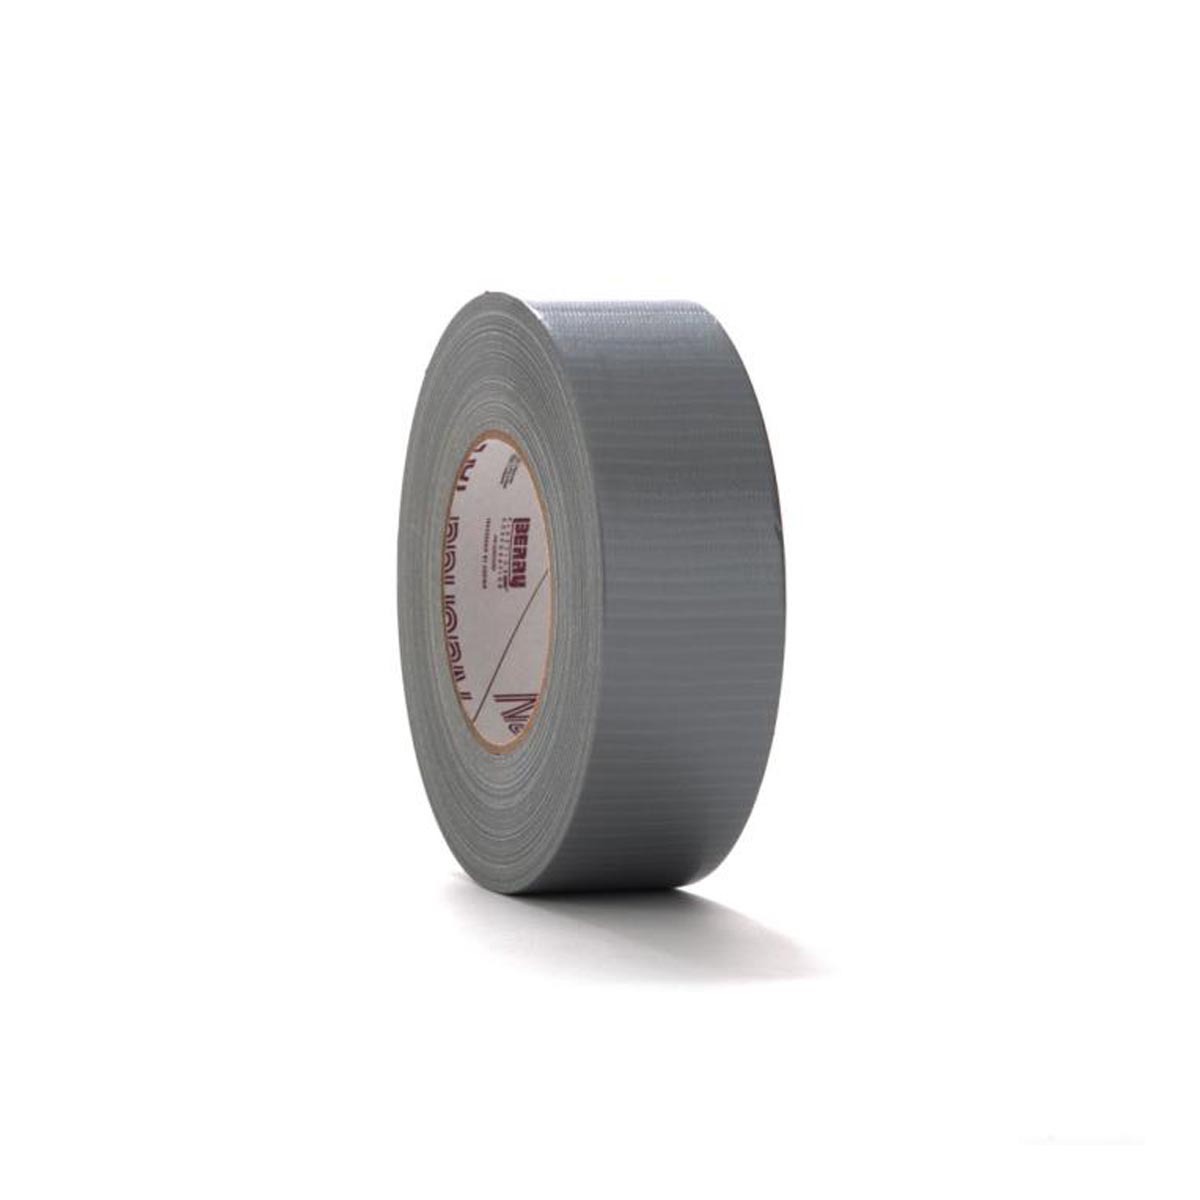 Airgas - 3MT021200-71121 - 3M™ 2.83 X 60.14 yd Beige Series 2307 5.2 mil  Crepe Paper Masking Tape